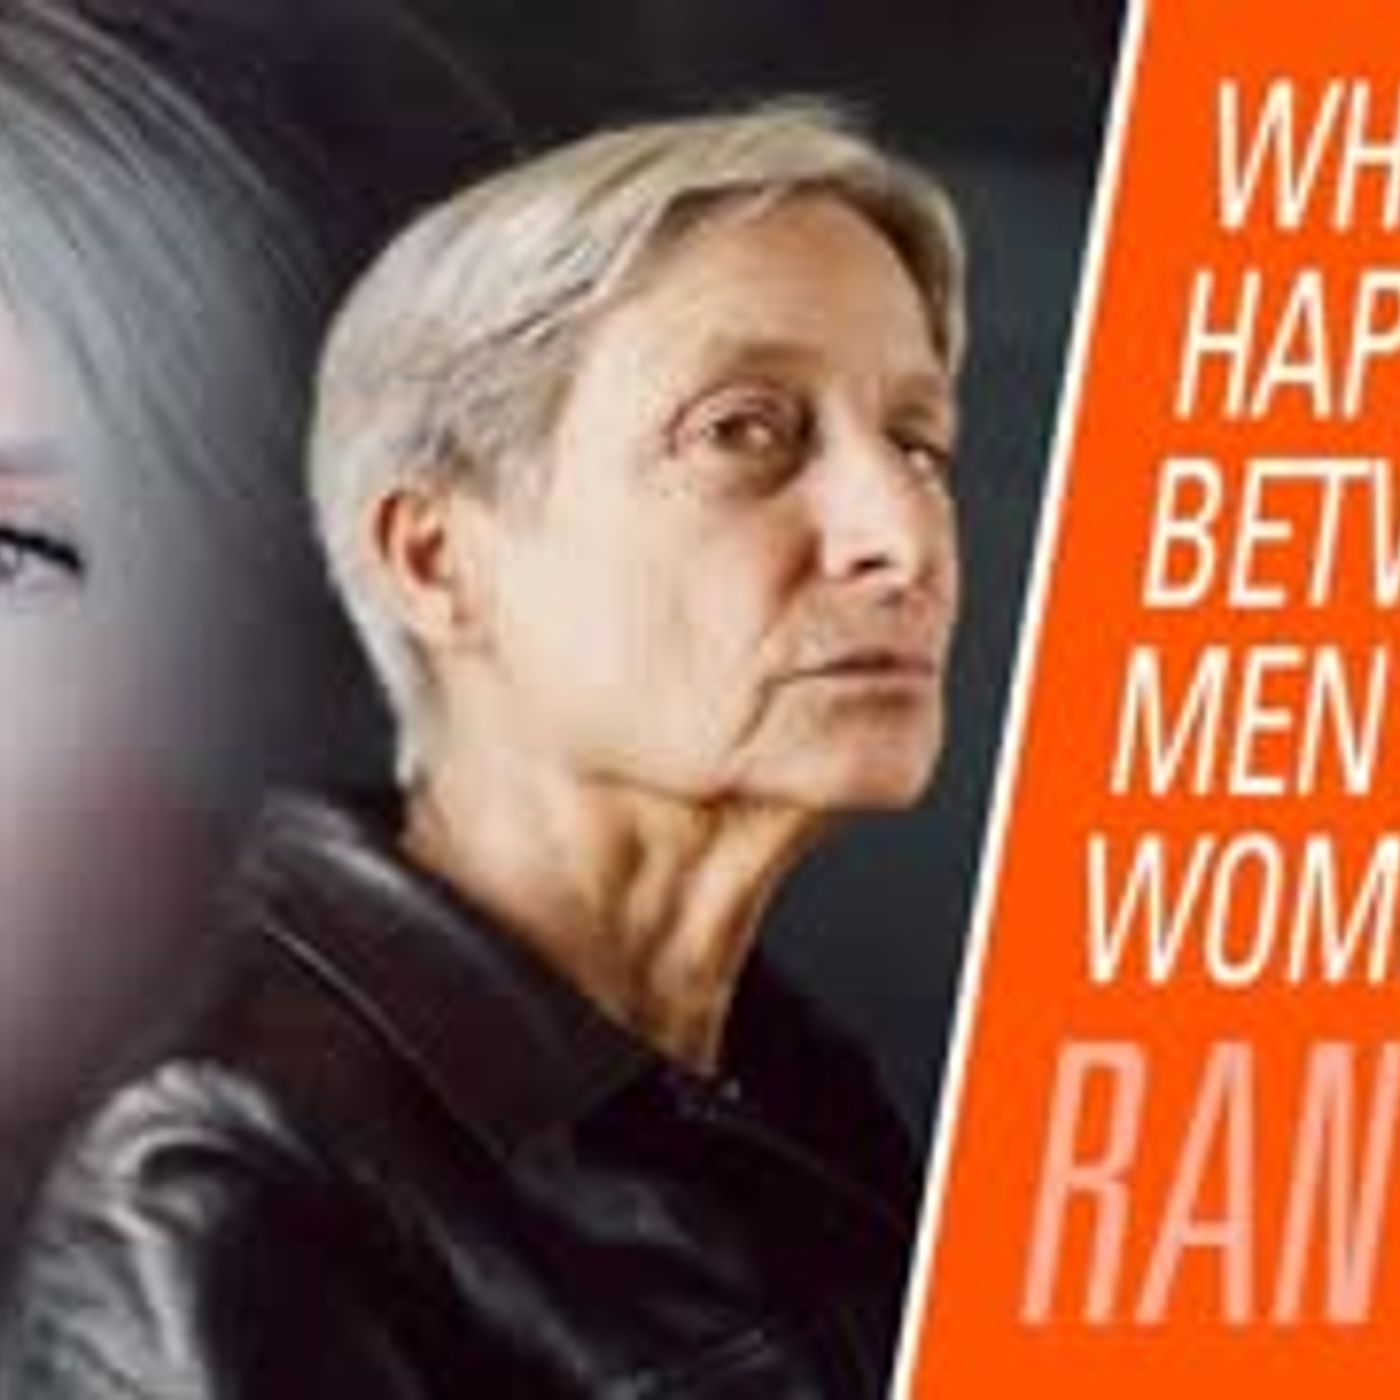 What's happening between men and women and how do we make it worse? | Rantzerker 213